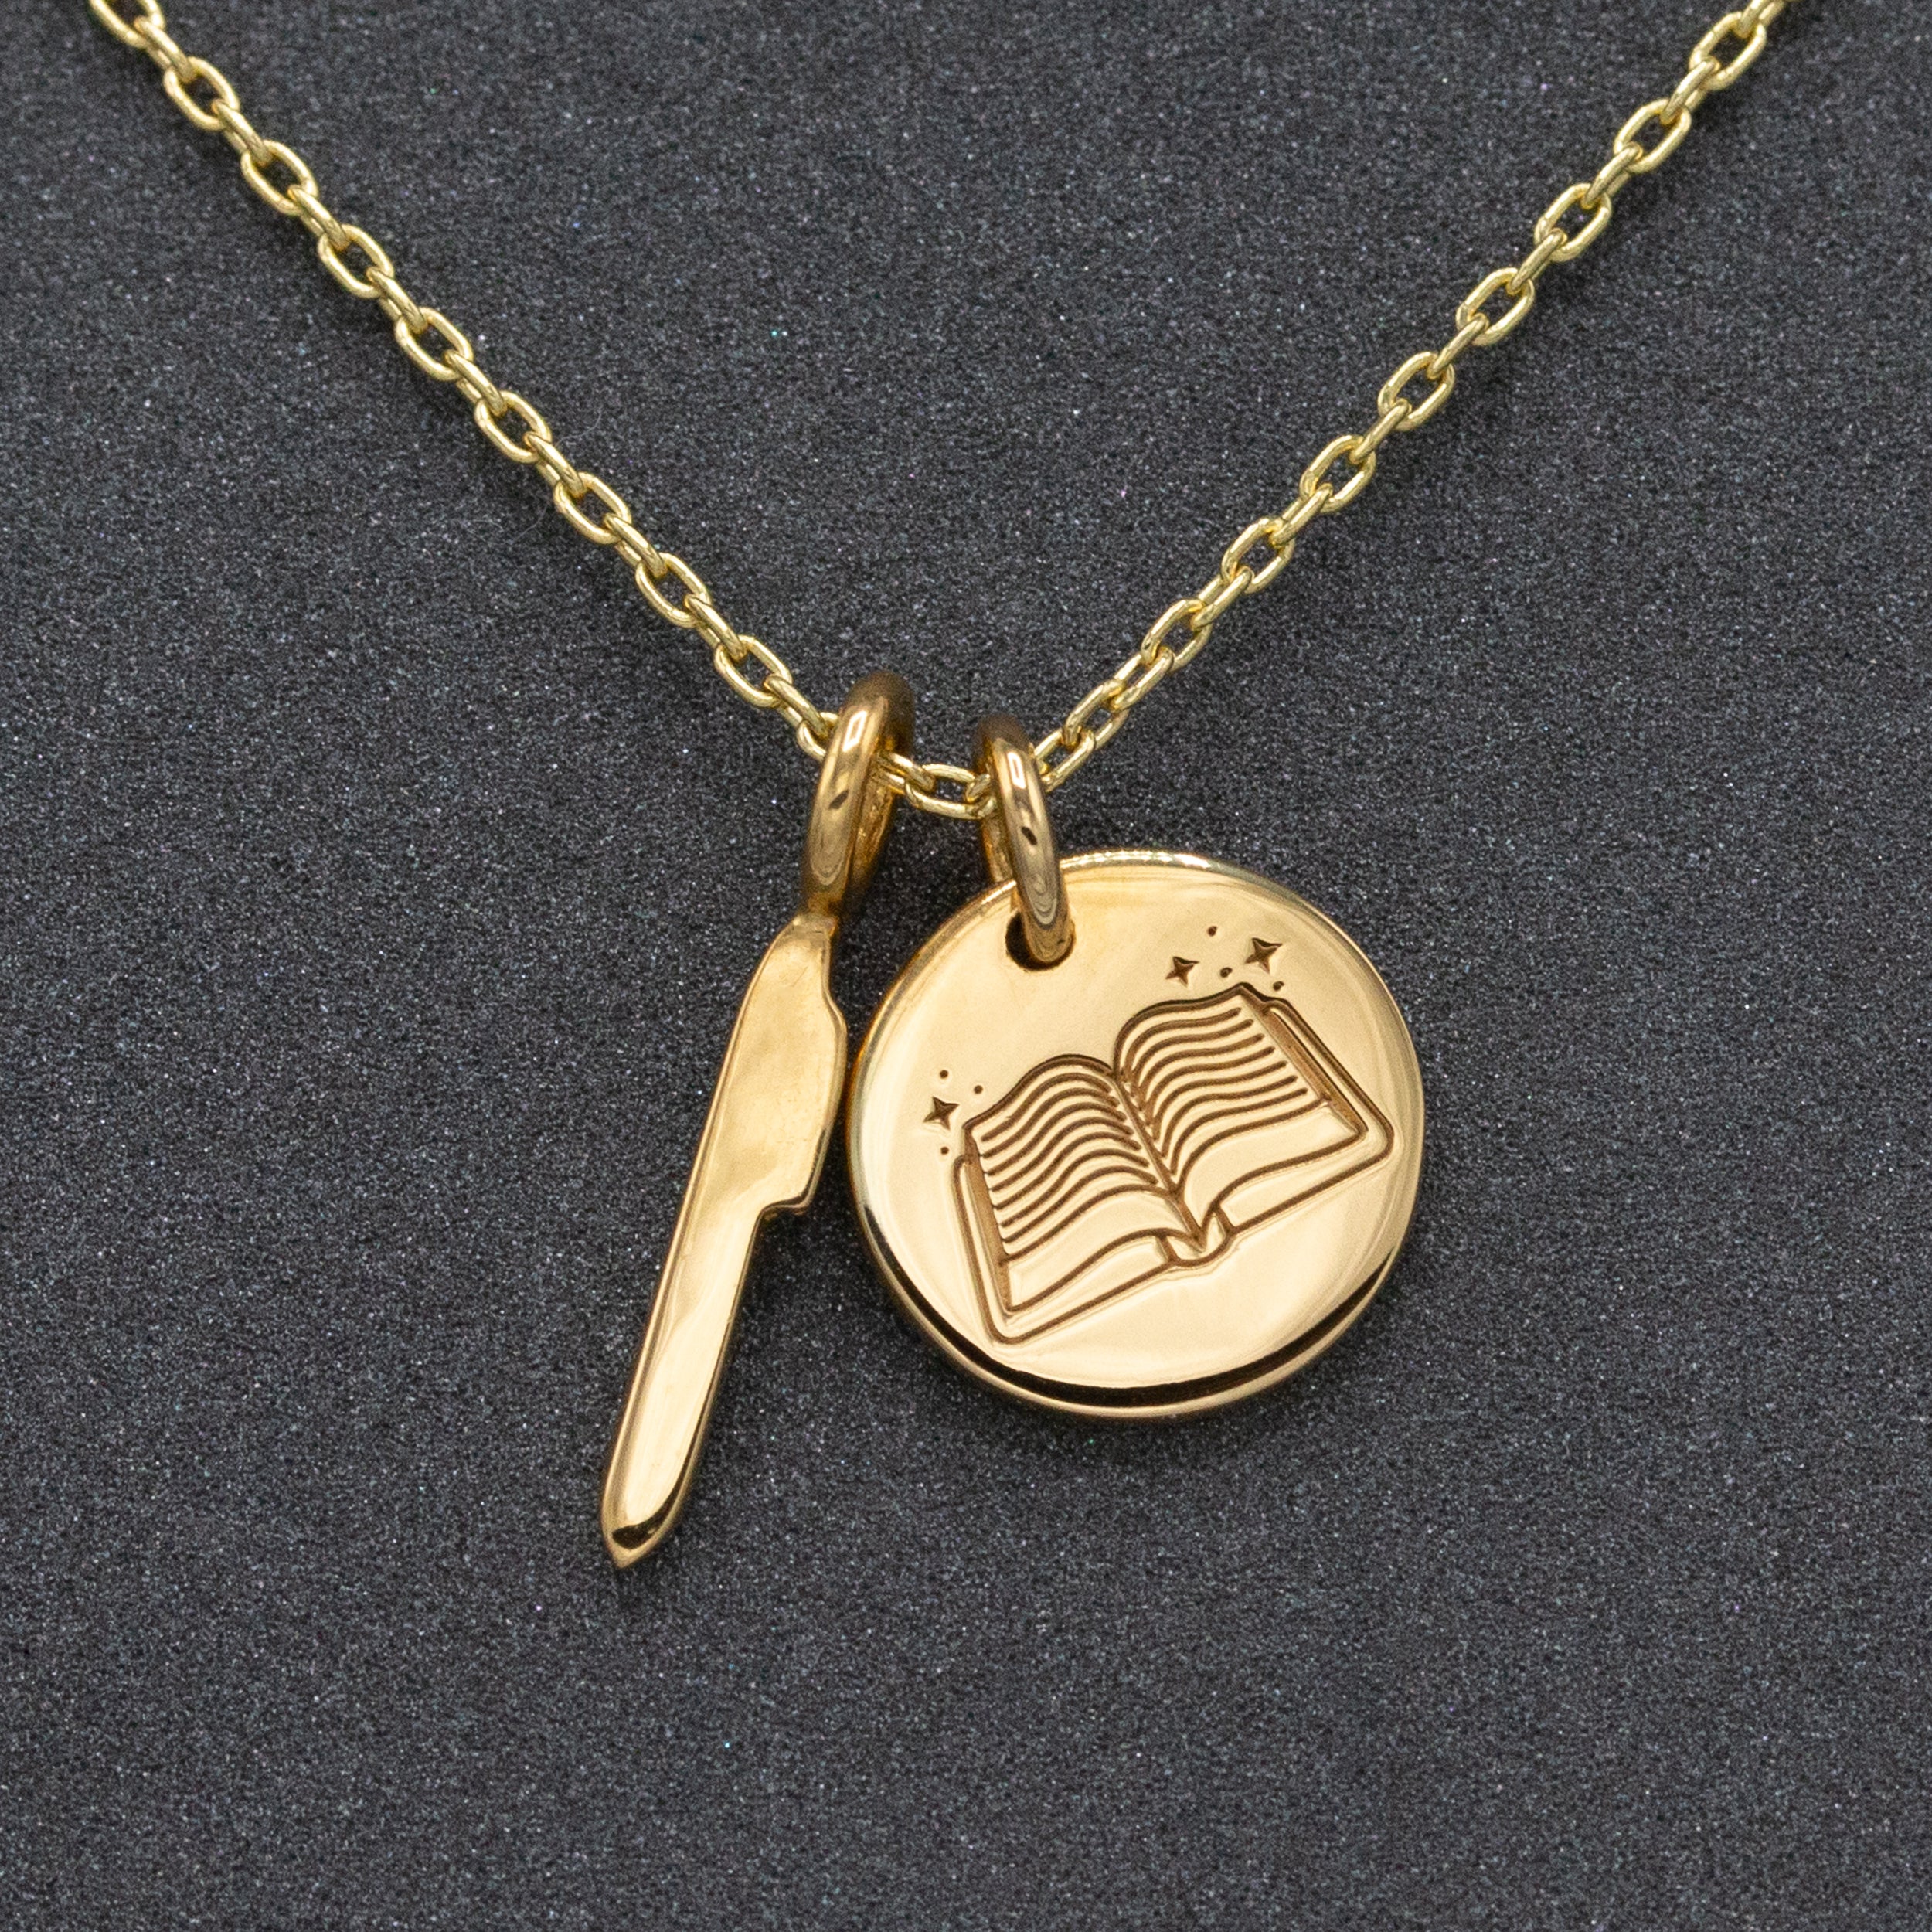 Weelday Pen necklace set in gold | ASOS